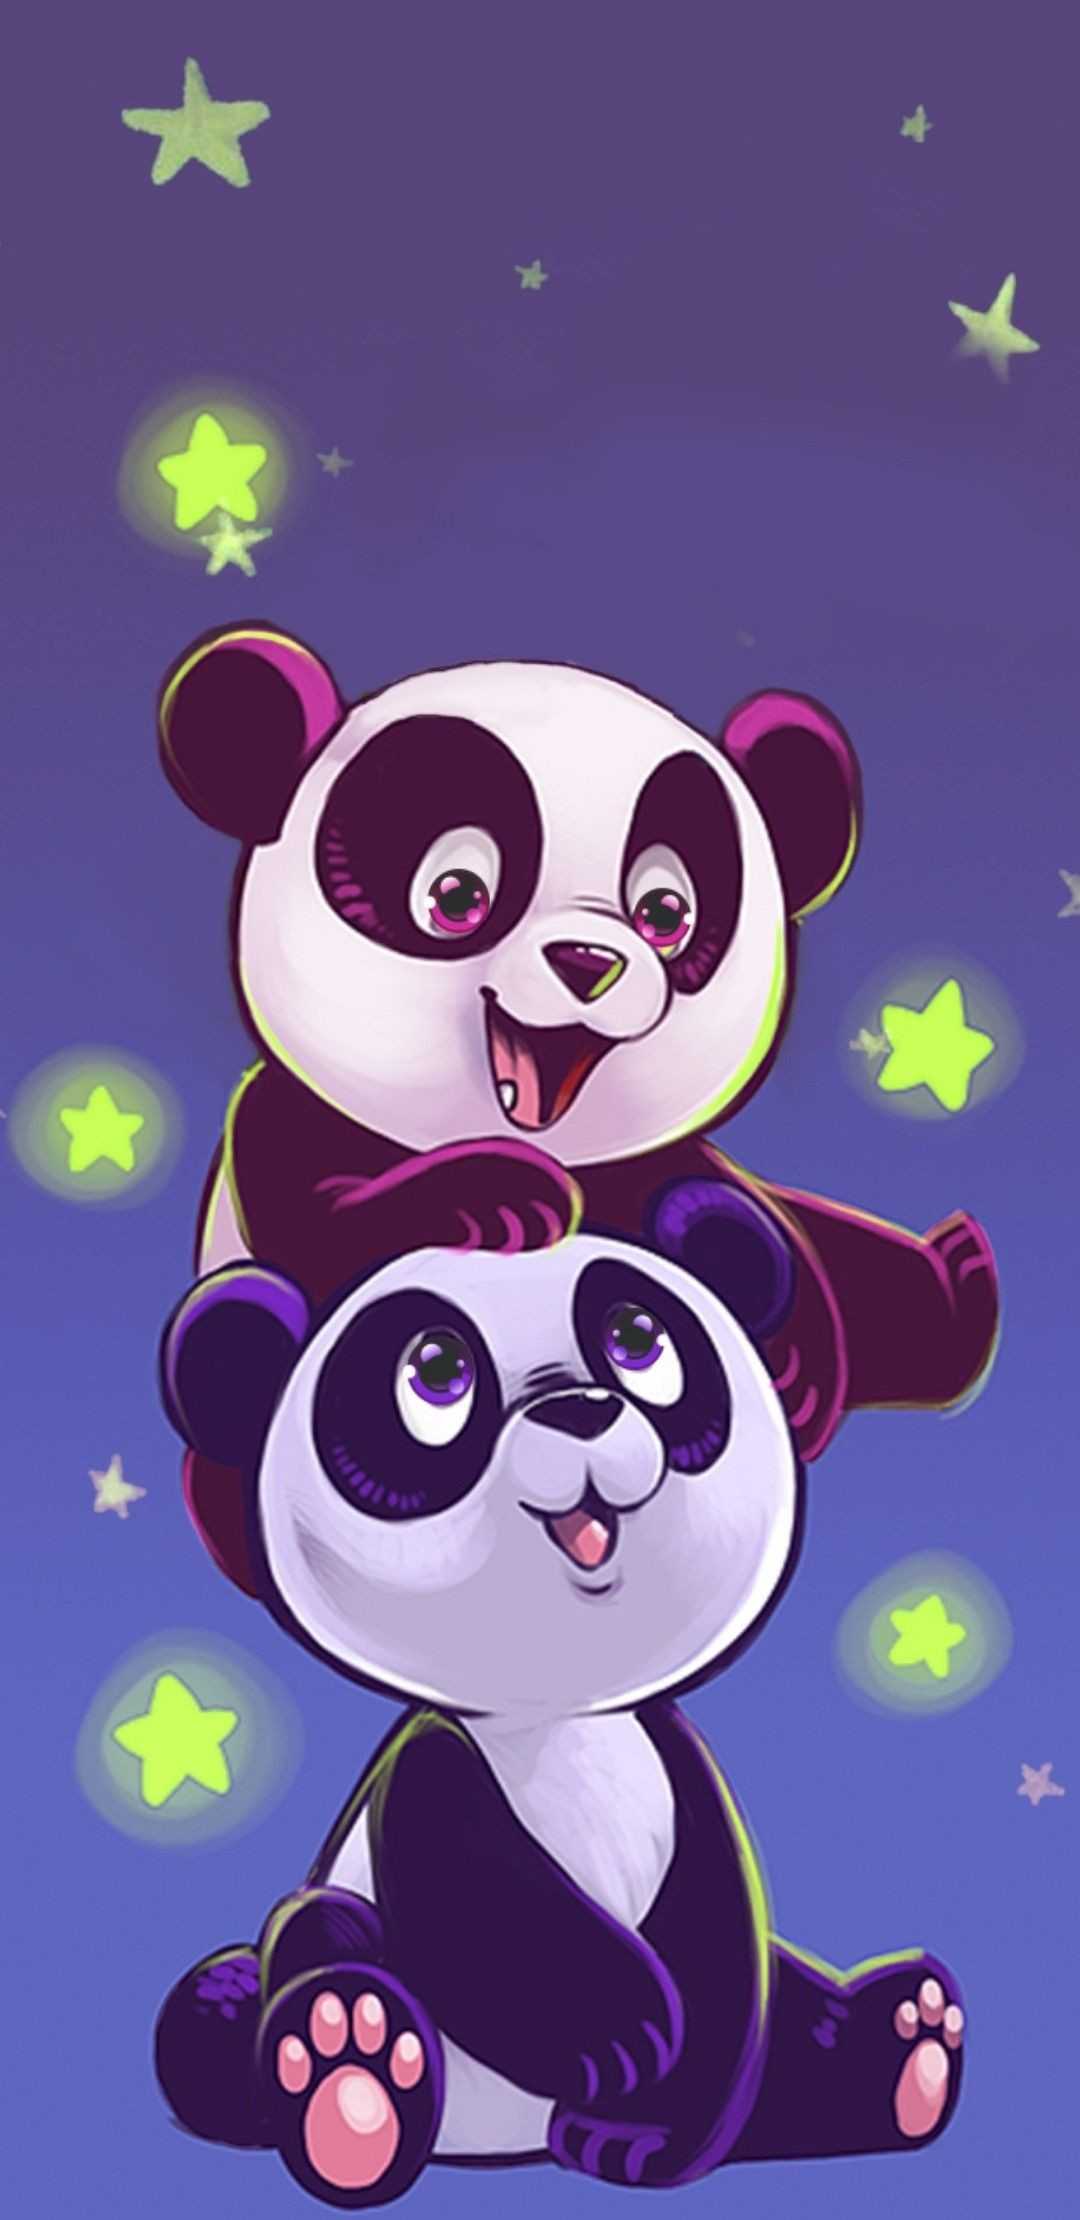 Tải xuống APK Cute Panda cho Android